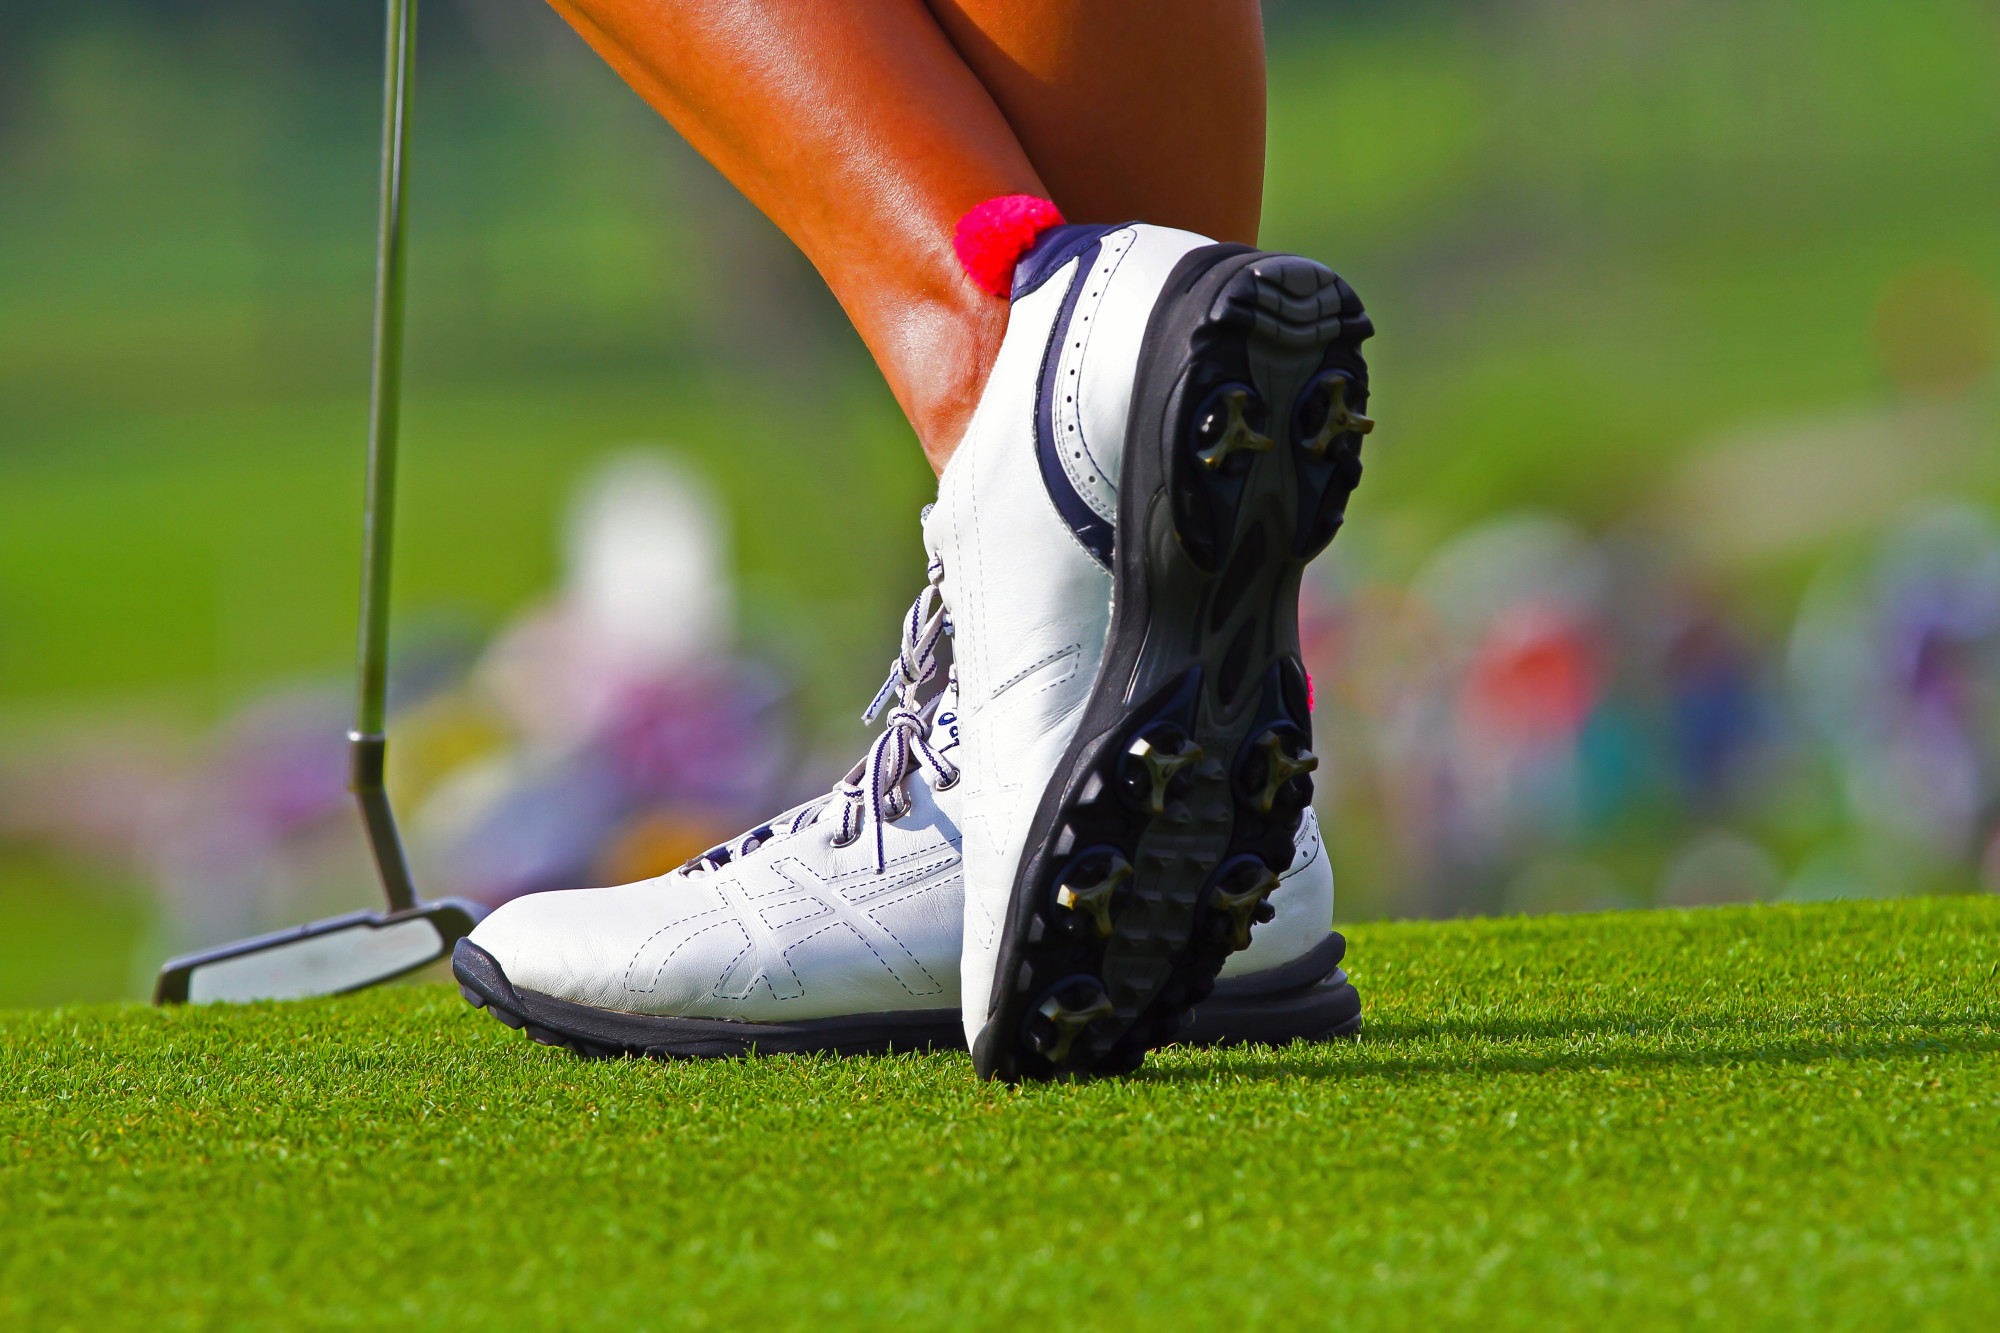 ocala golf course lessons golf improvement guide